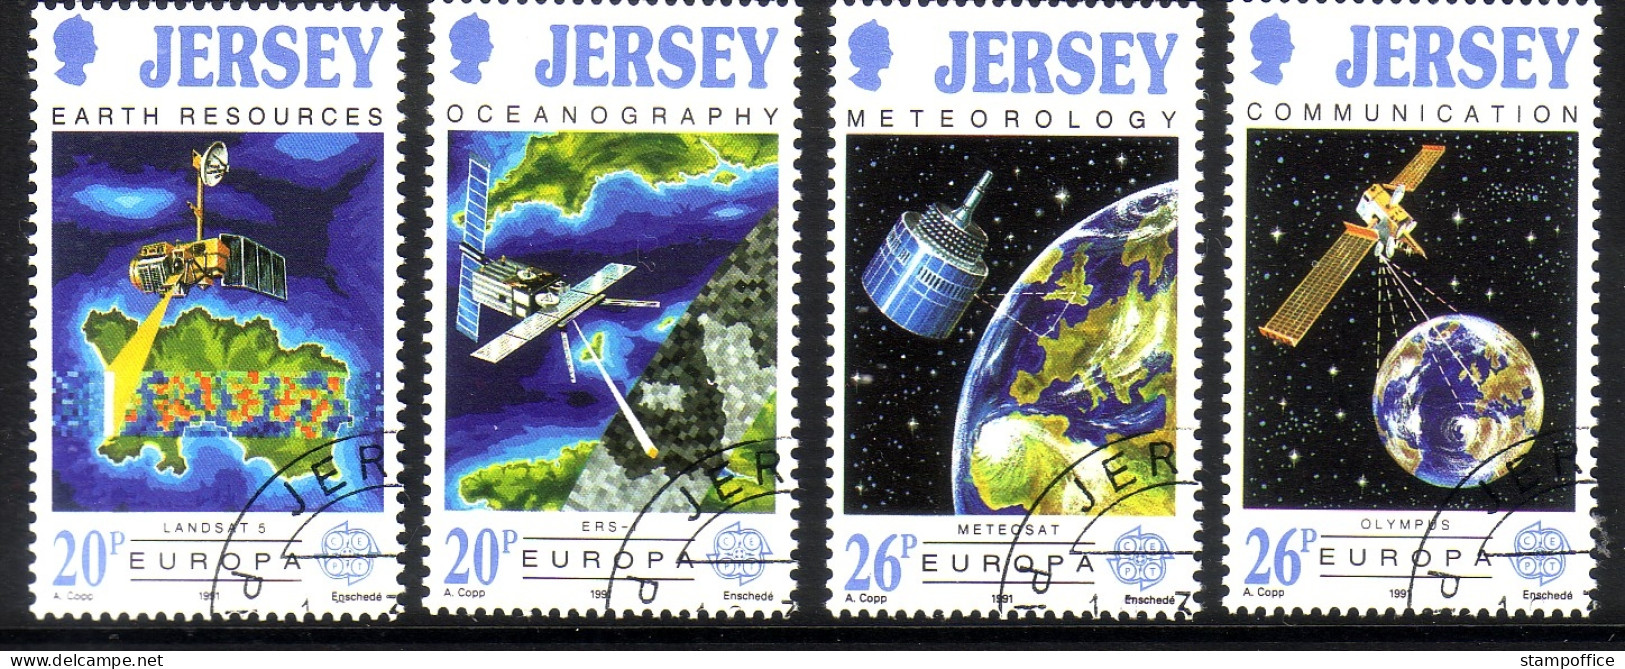 JERSEY MI-NR. 539-542 GESTEMPELT(USED) EUROPA 1991 WELTRAUMFAHRT - 1991